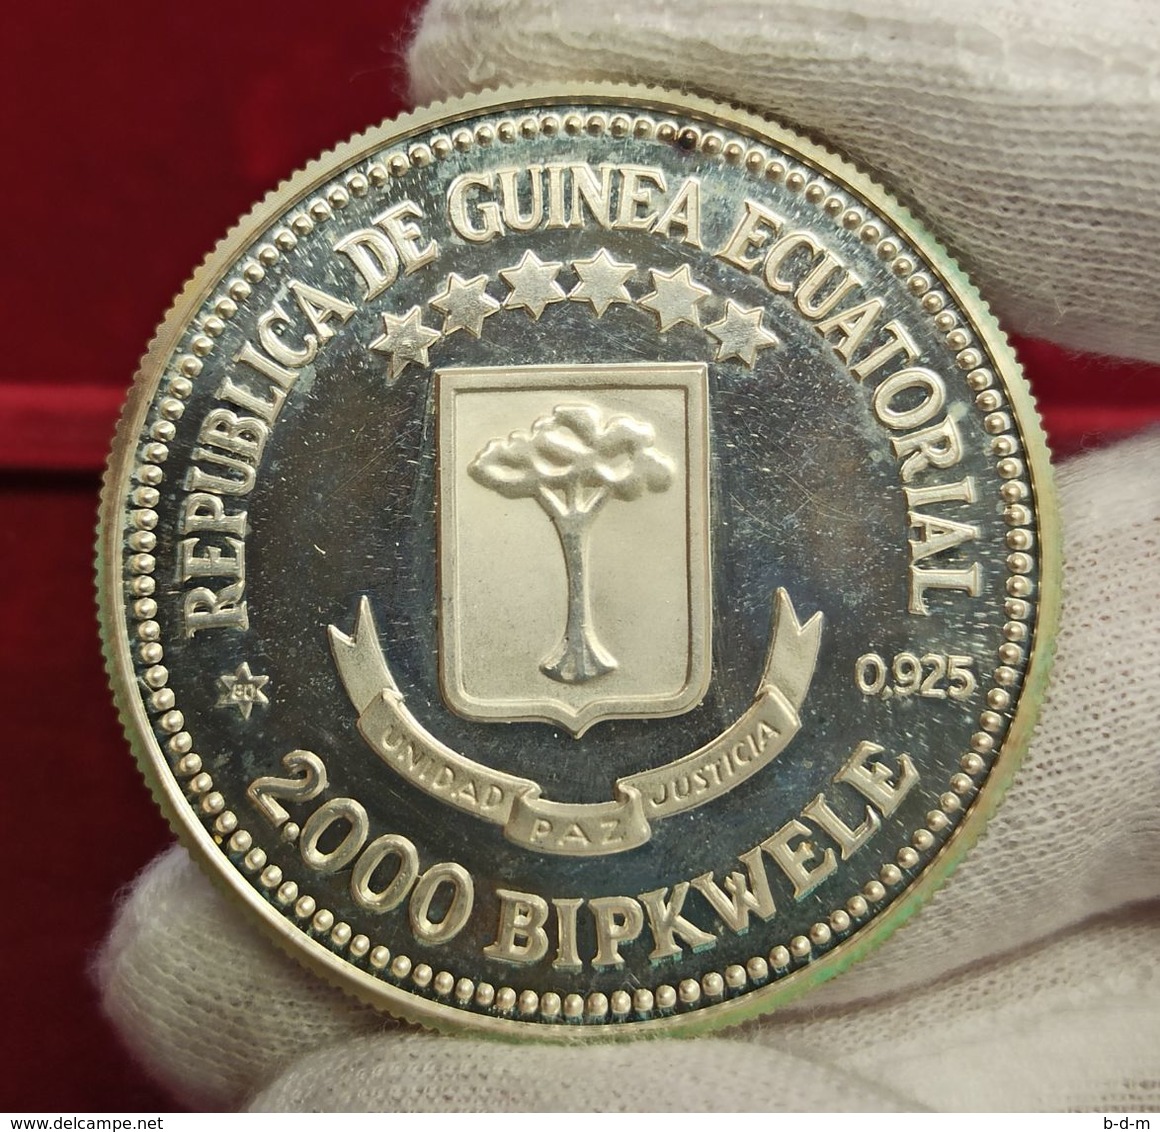 Guinea Ecuatorial 2000 Bipkwele Visita De Los Reyes 1979 X# 2 Plata Proof - Guinea Equatoriale